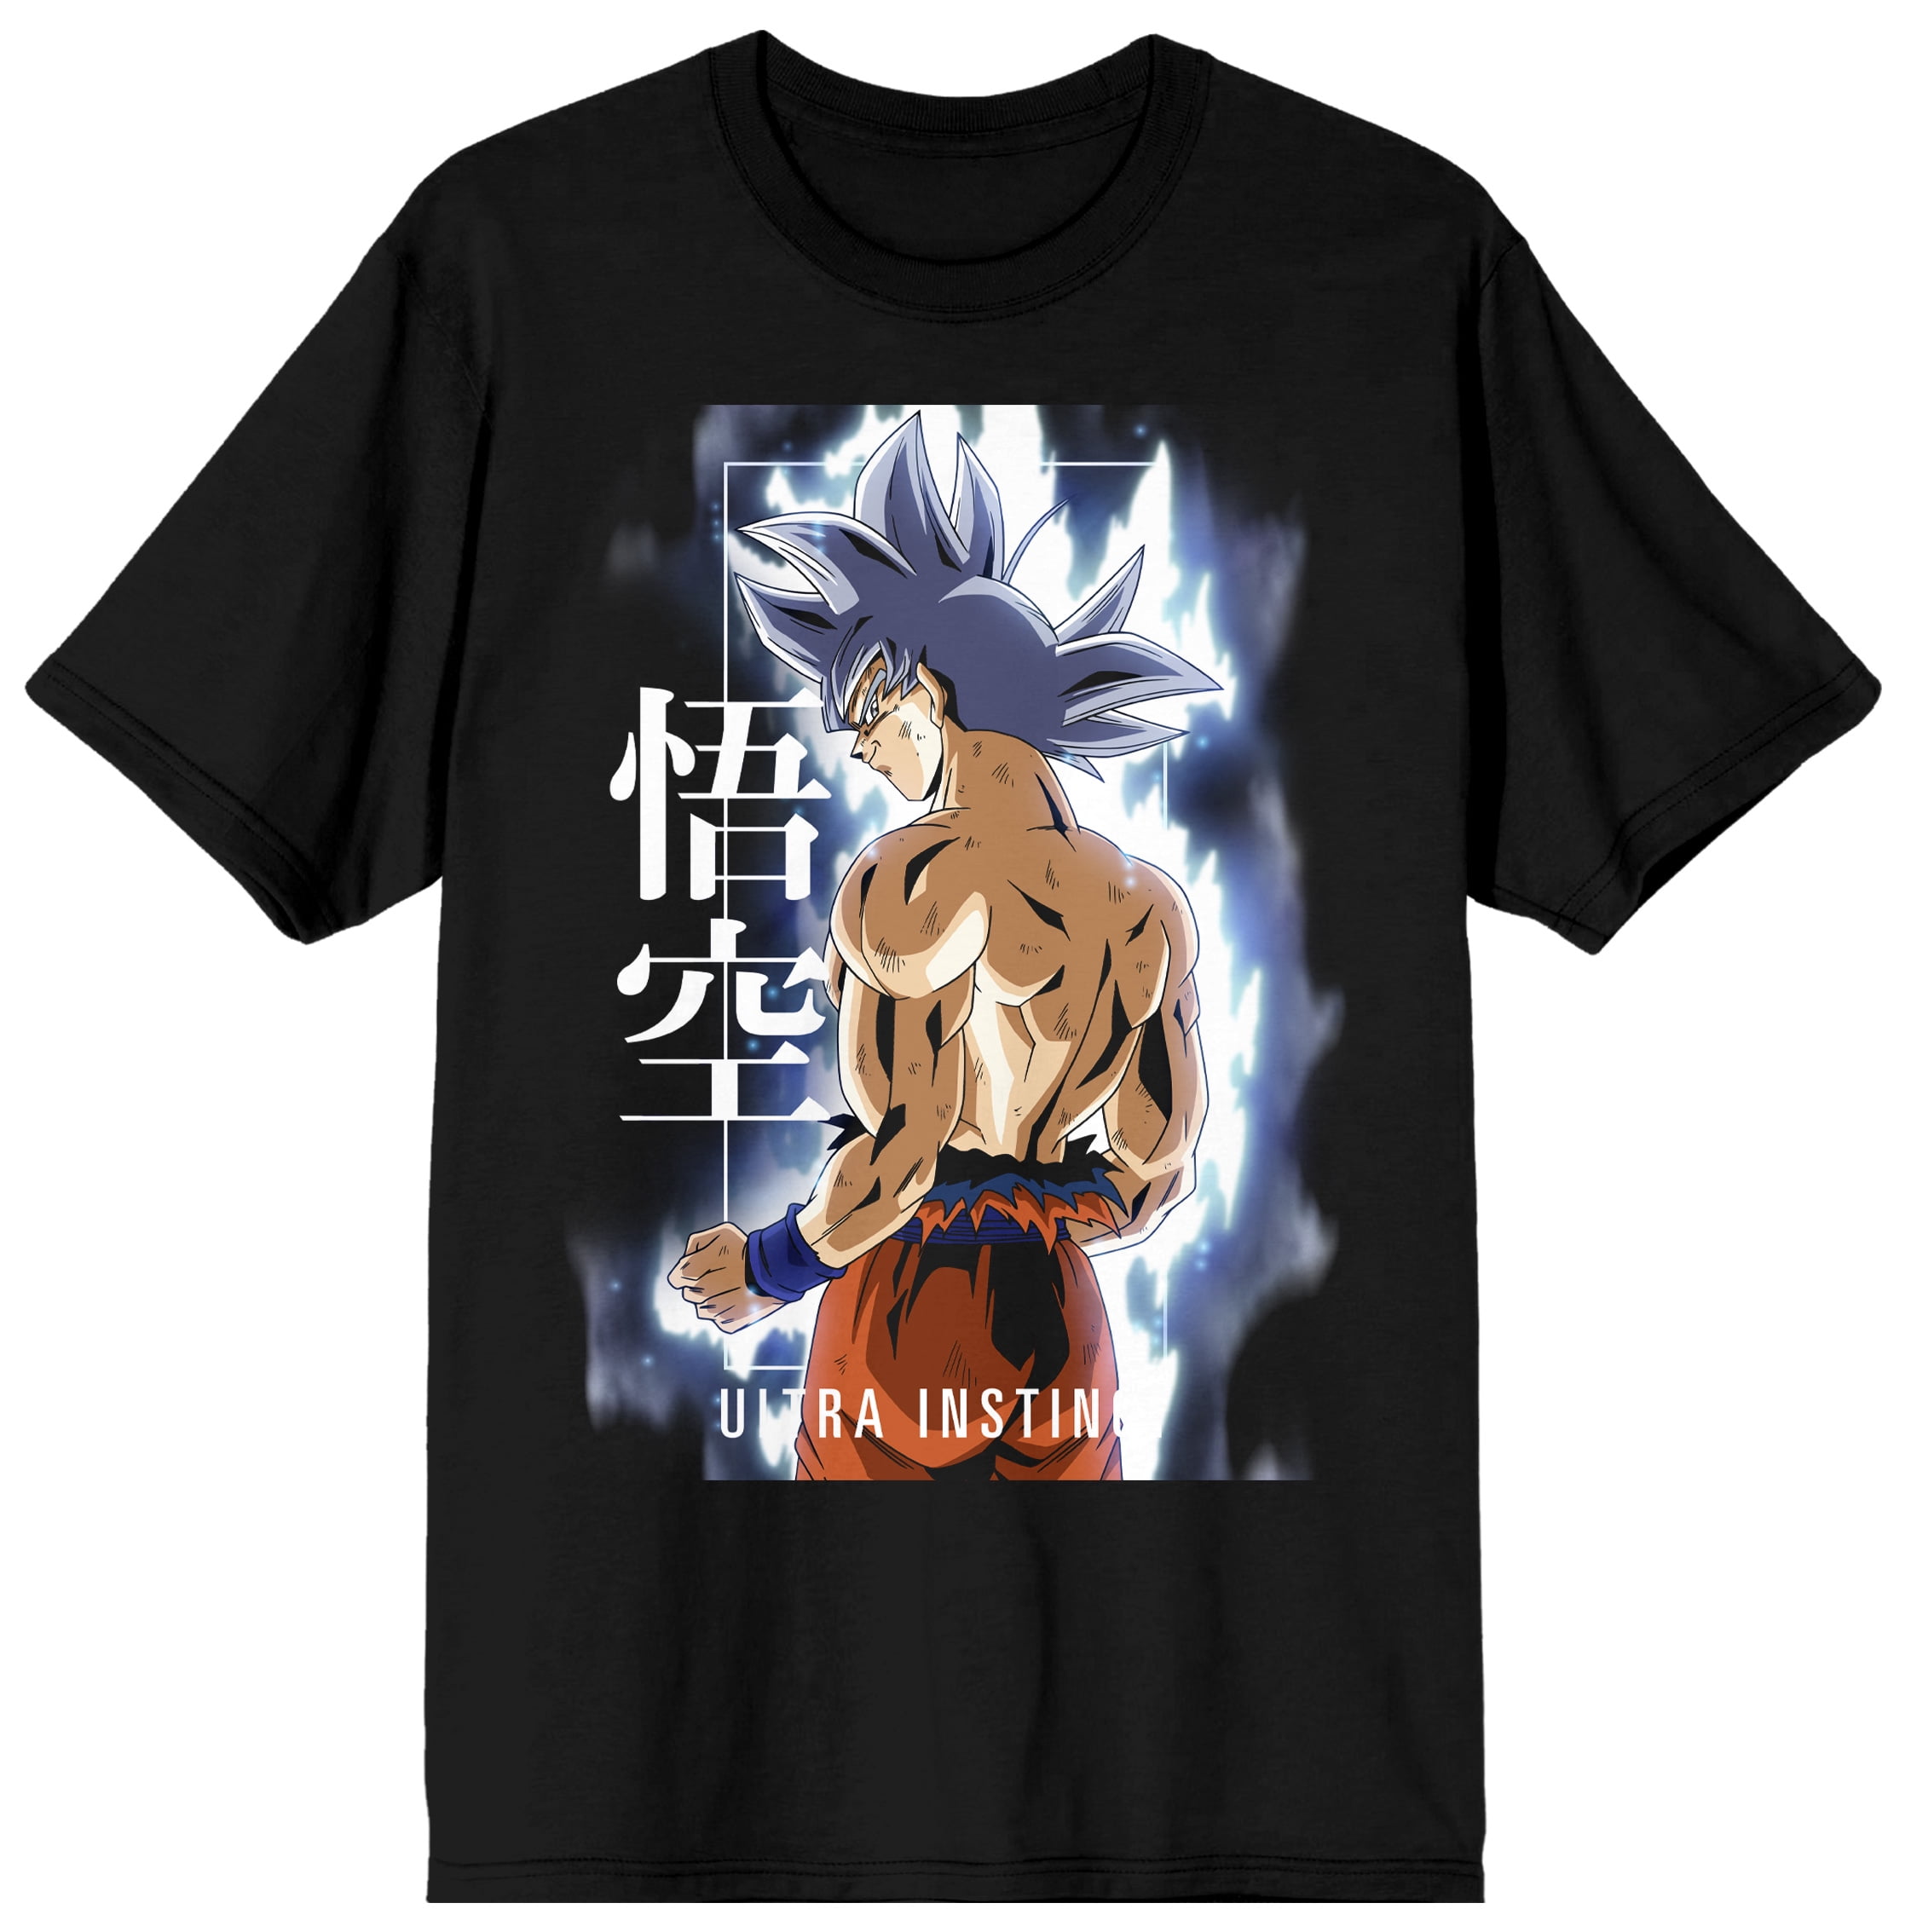 Men's Dragon Ball Z  Black T shirt  Anime Manga Comics Medium NEW look at back 